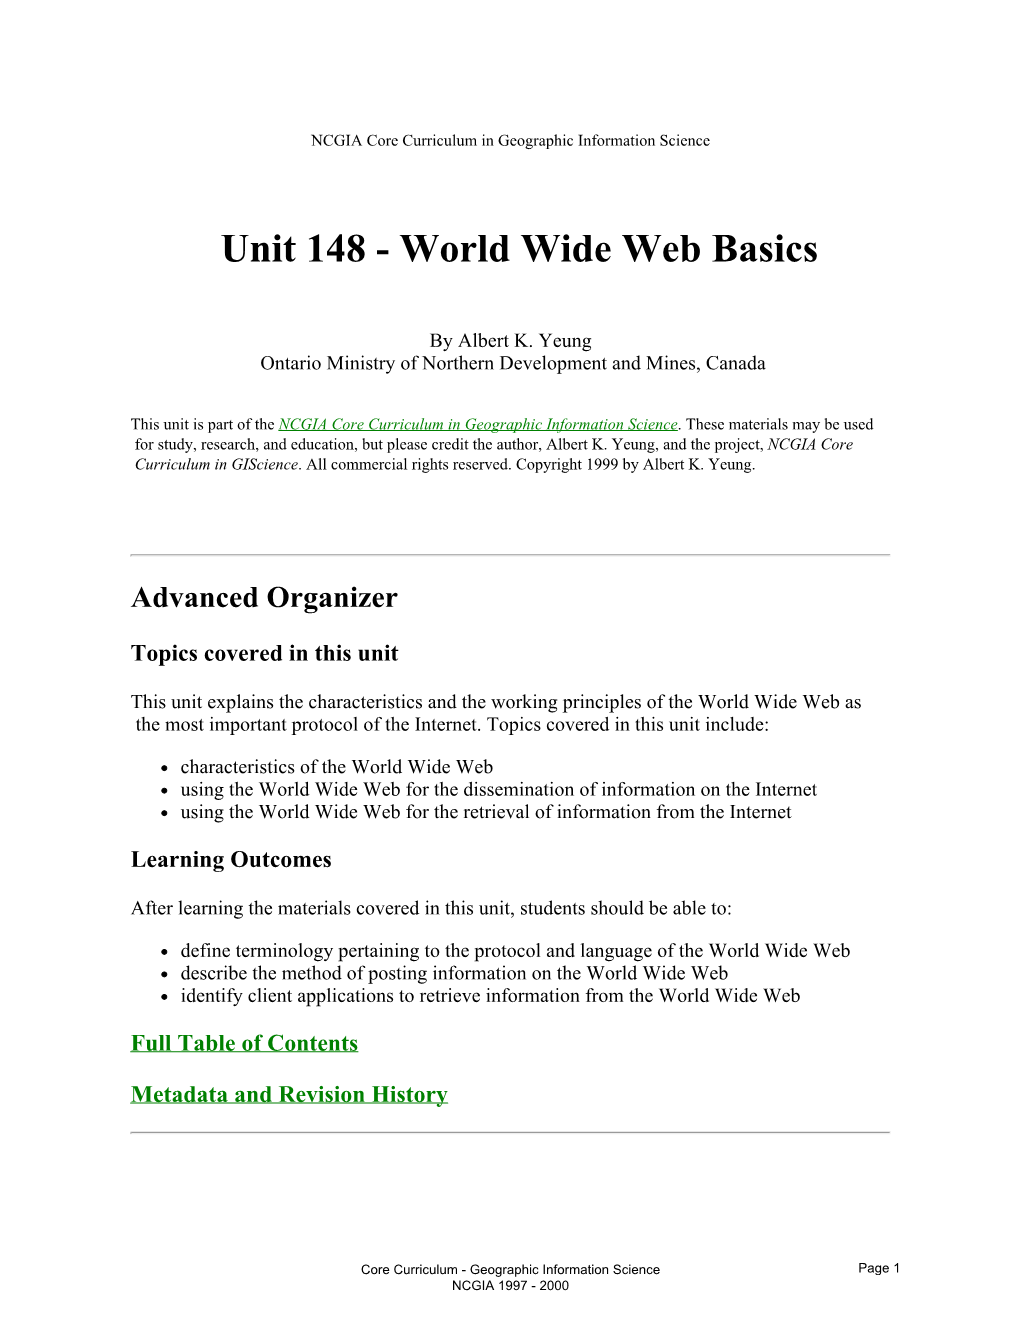 World Wide Web Basics